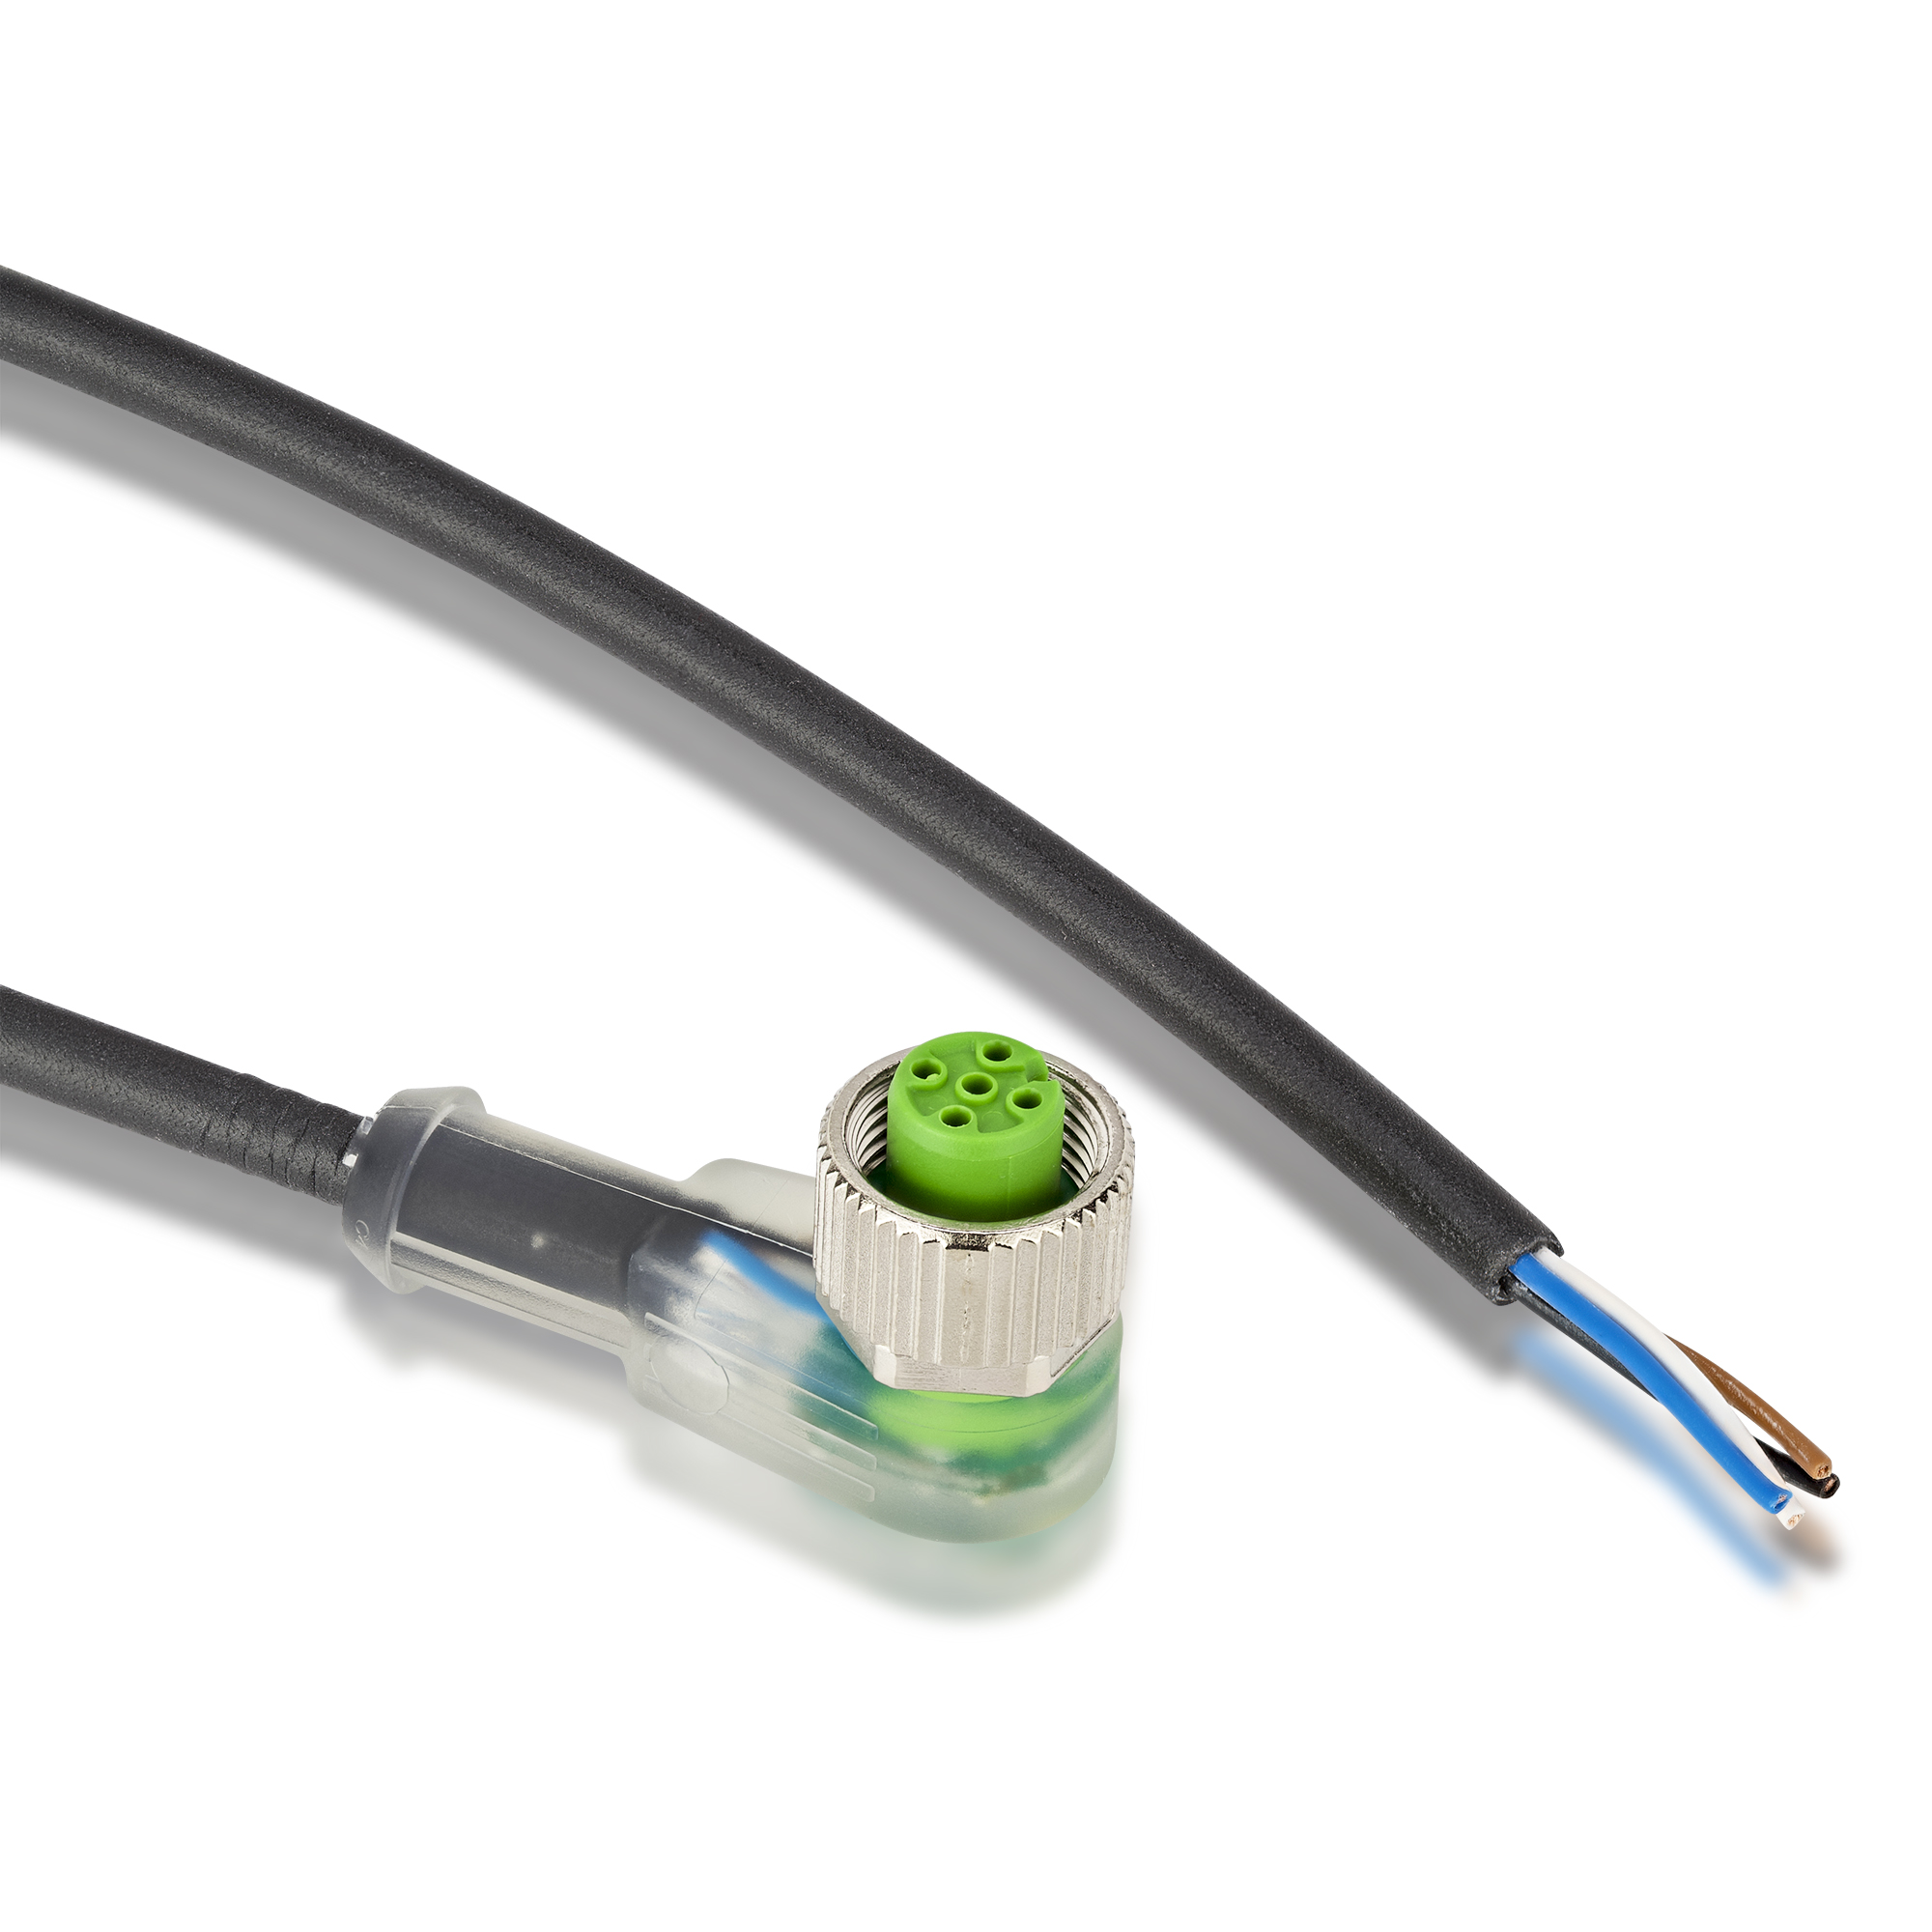 Cable M12x1; angled plug with LED